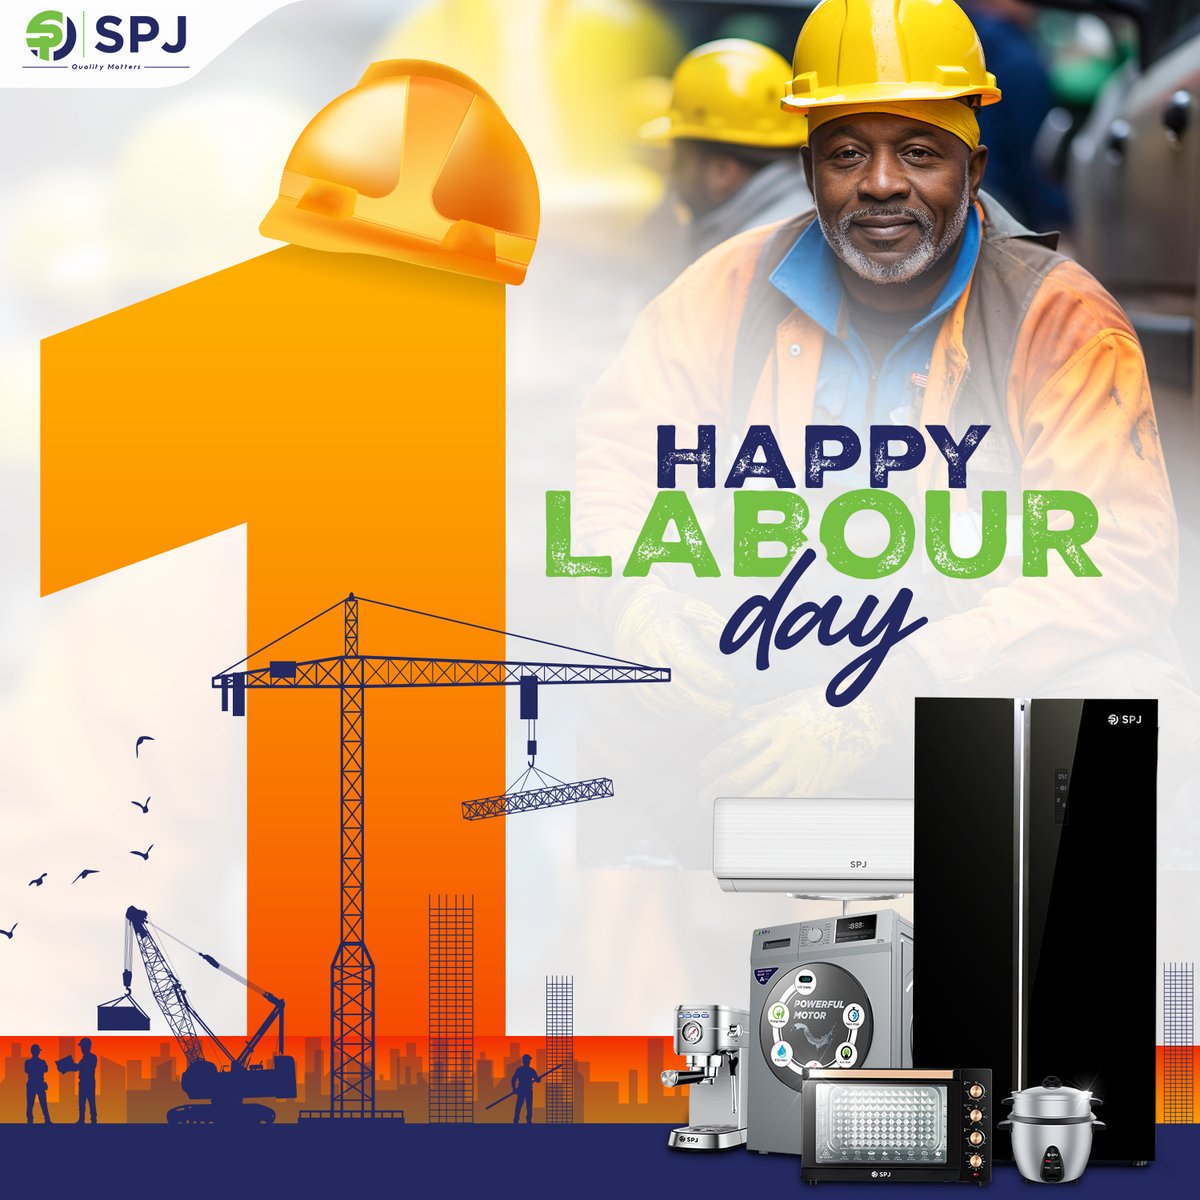 Celebrating the hard work that powers progress. Happy Labour Day from SPJ Electronics!

#spjelectronics #HappyLaborDay   #Mnakwethu  #MommyClubShowmax  #LaborDay  #qualitymatter #anccomeduze